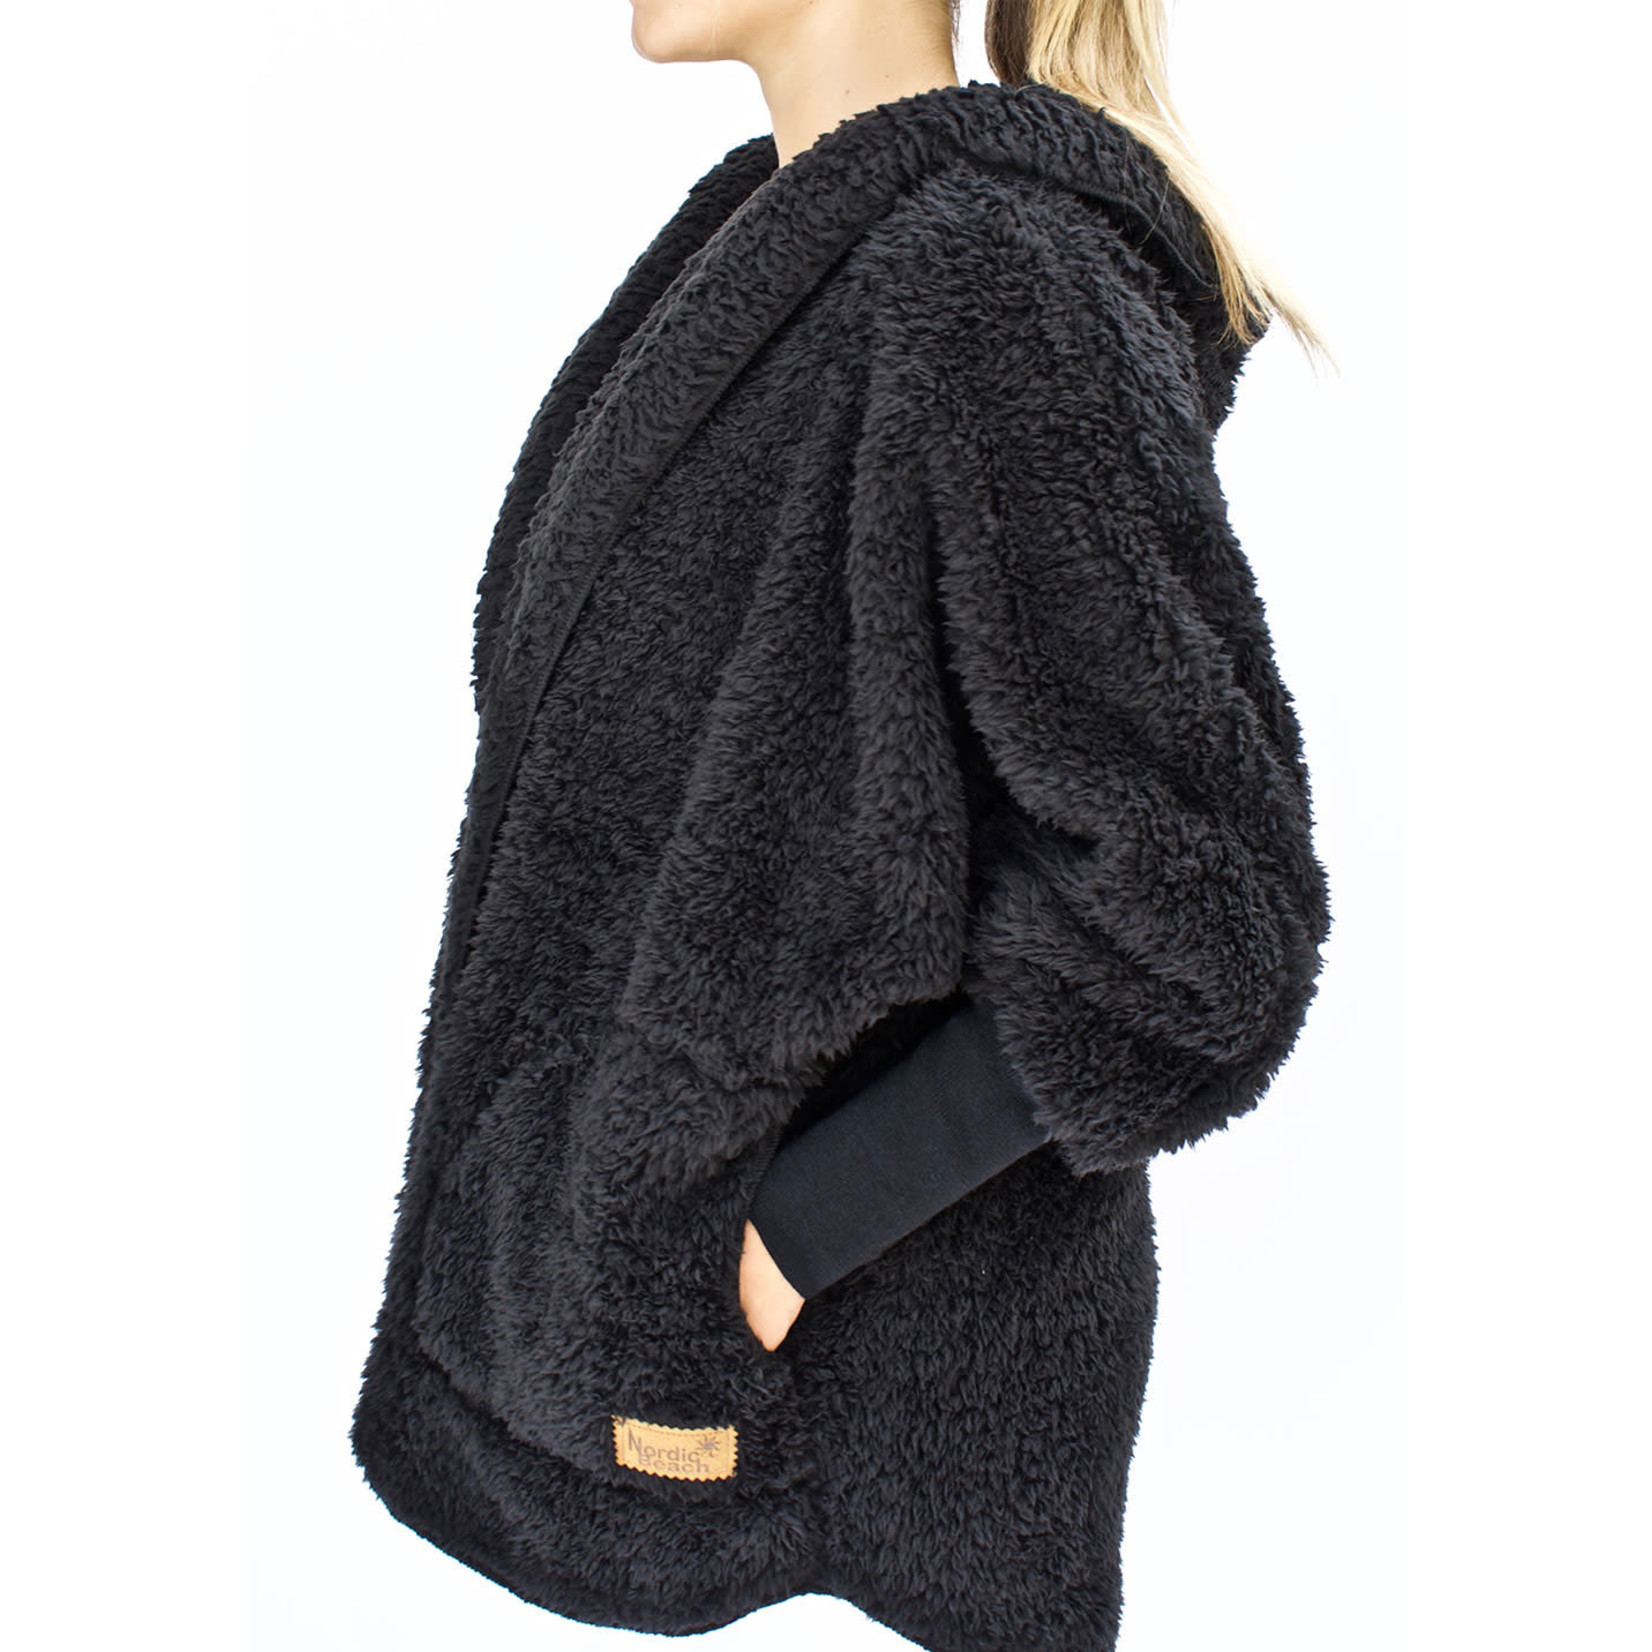 Nordic Beach Fuzzy Fleece Hooded Cardigan in Black Licorice